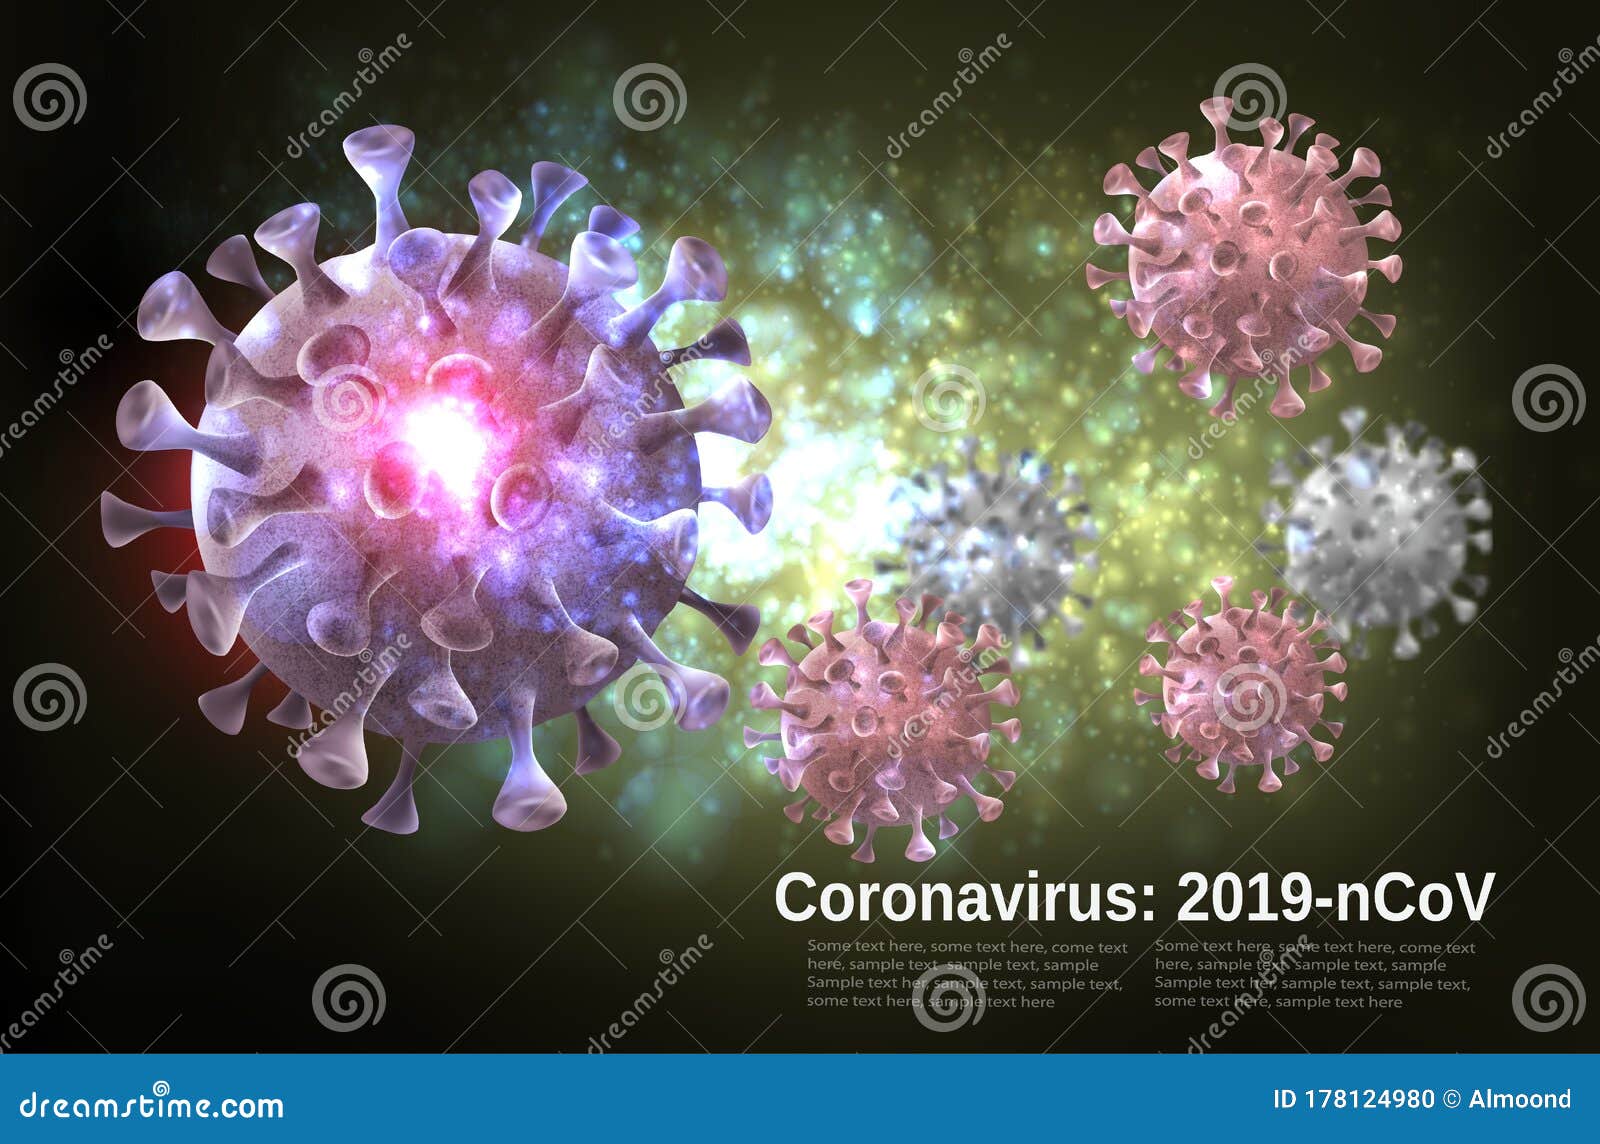 coranavirus panorama. background with virus covid - 19 molecules